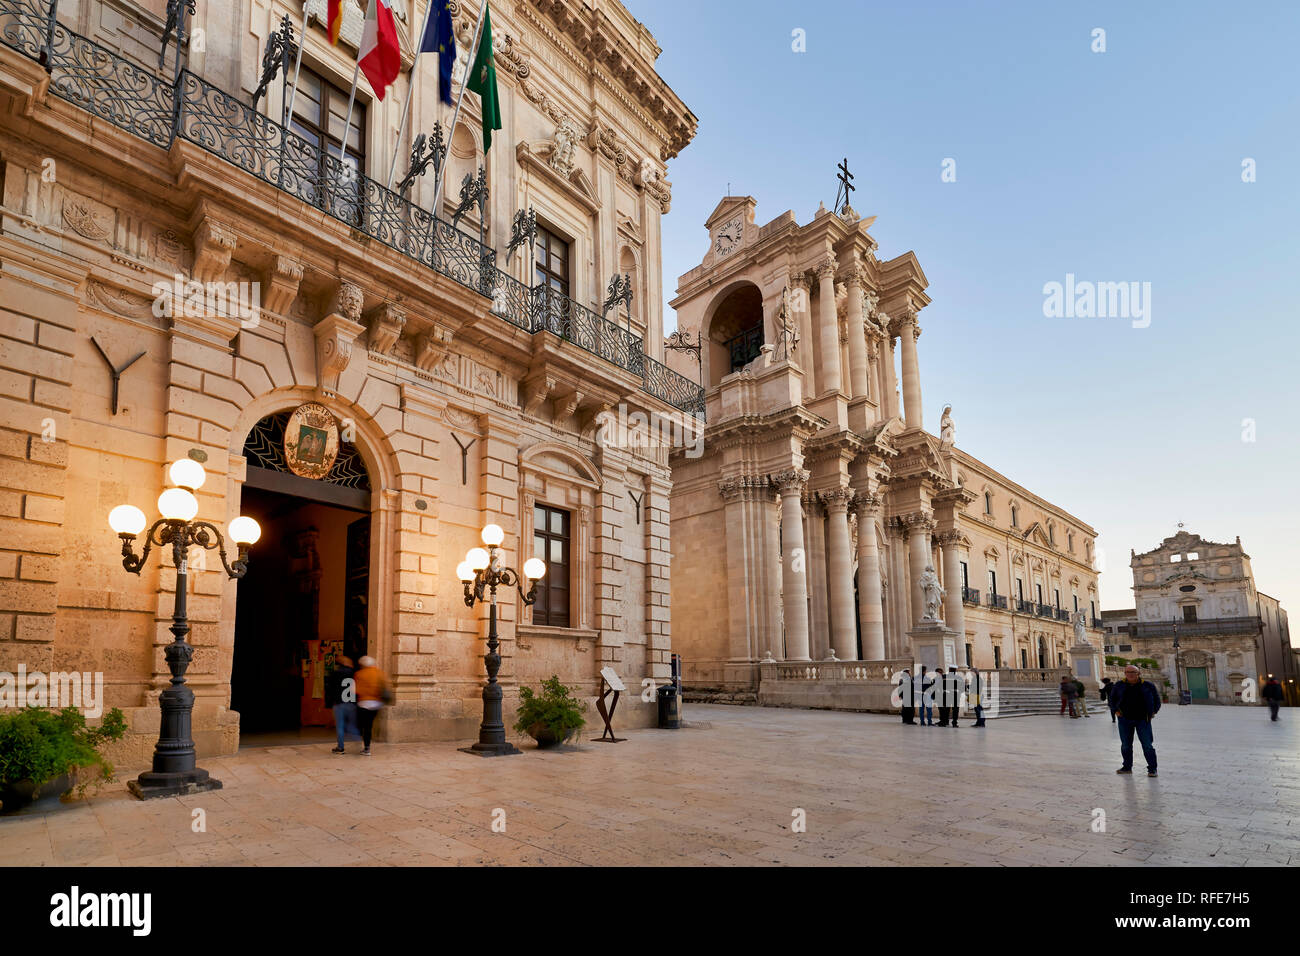 Das Rathaus von Syrakus, der Insel Ortygia. In Piazza Duomo. Sizilien, Italien Stockfoto